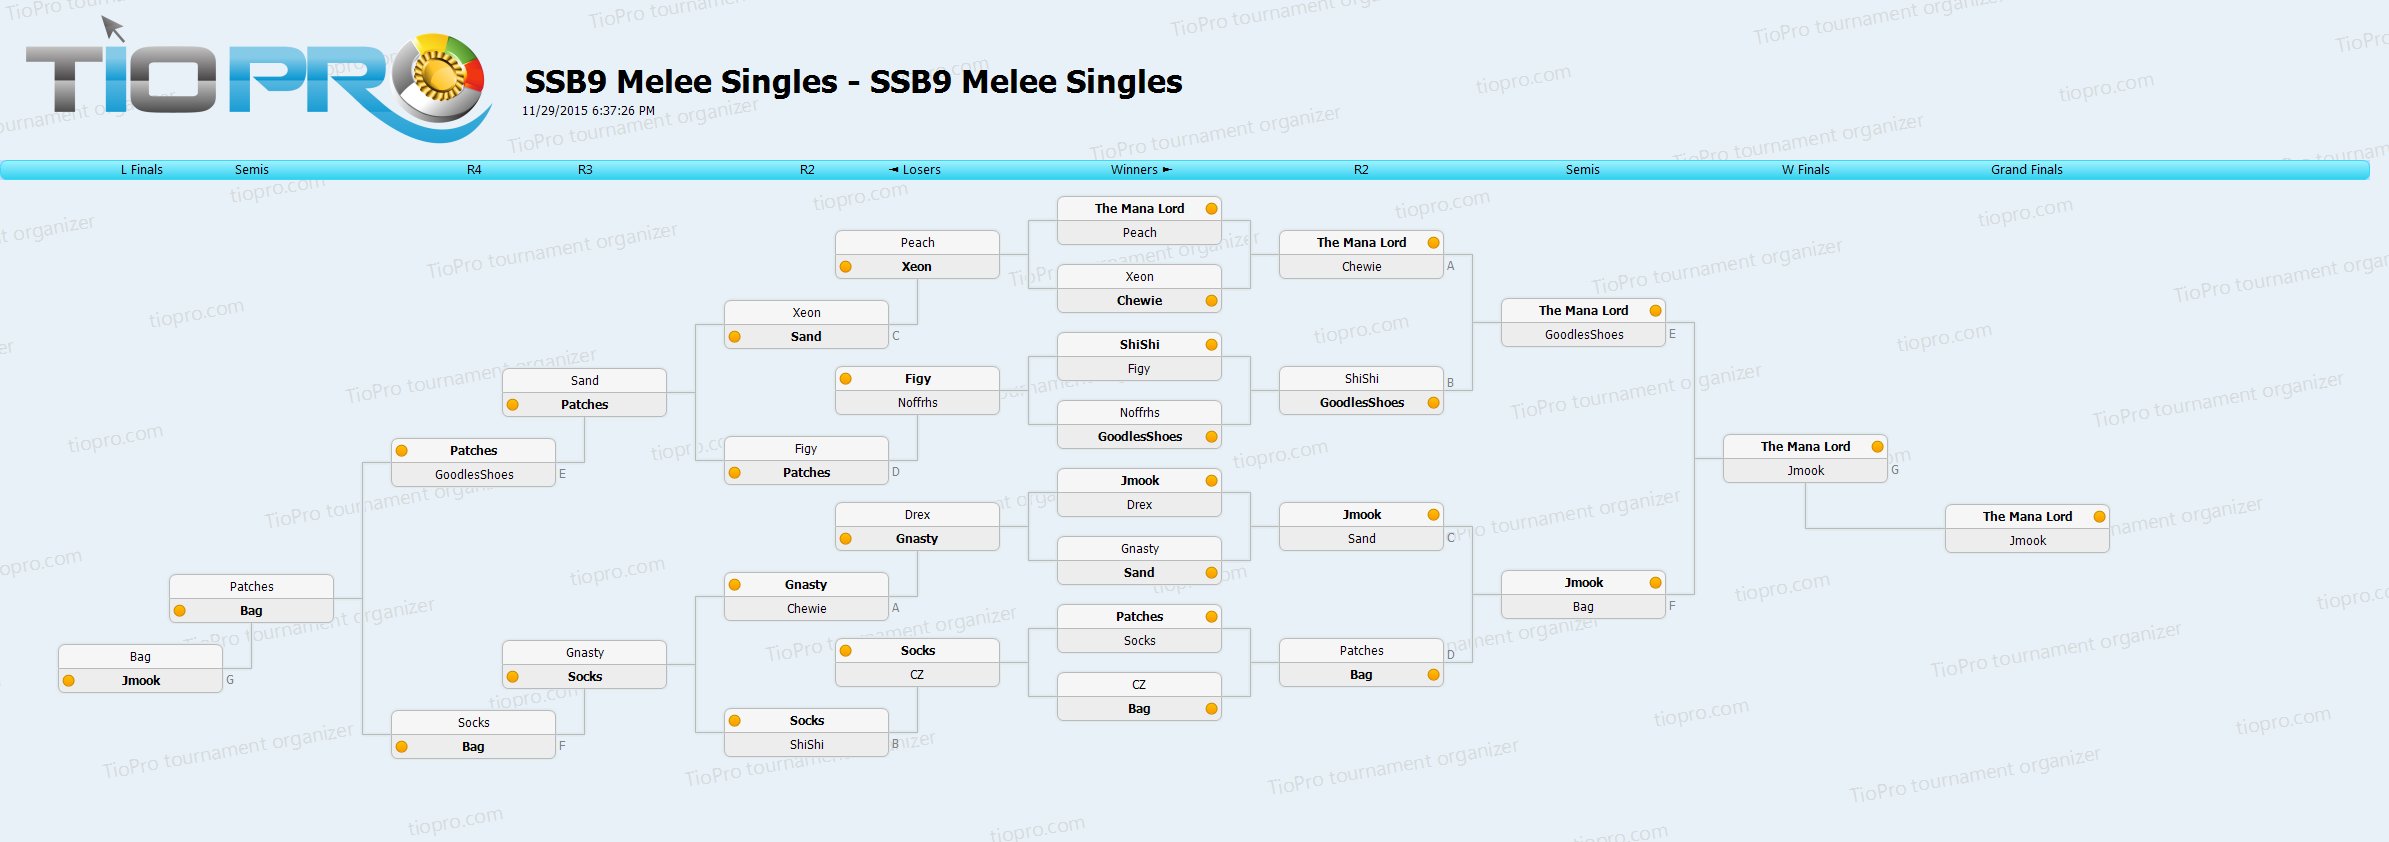 SSB9 Melee Singles